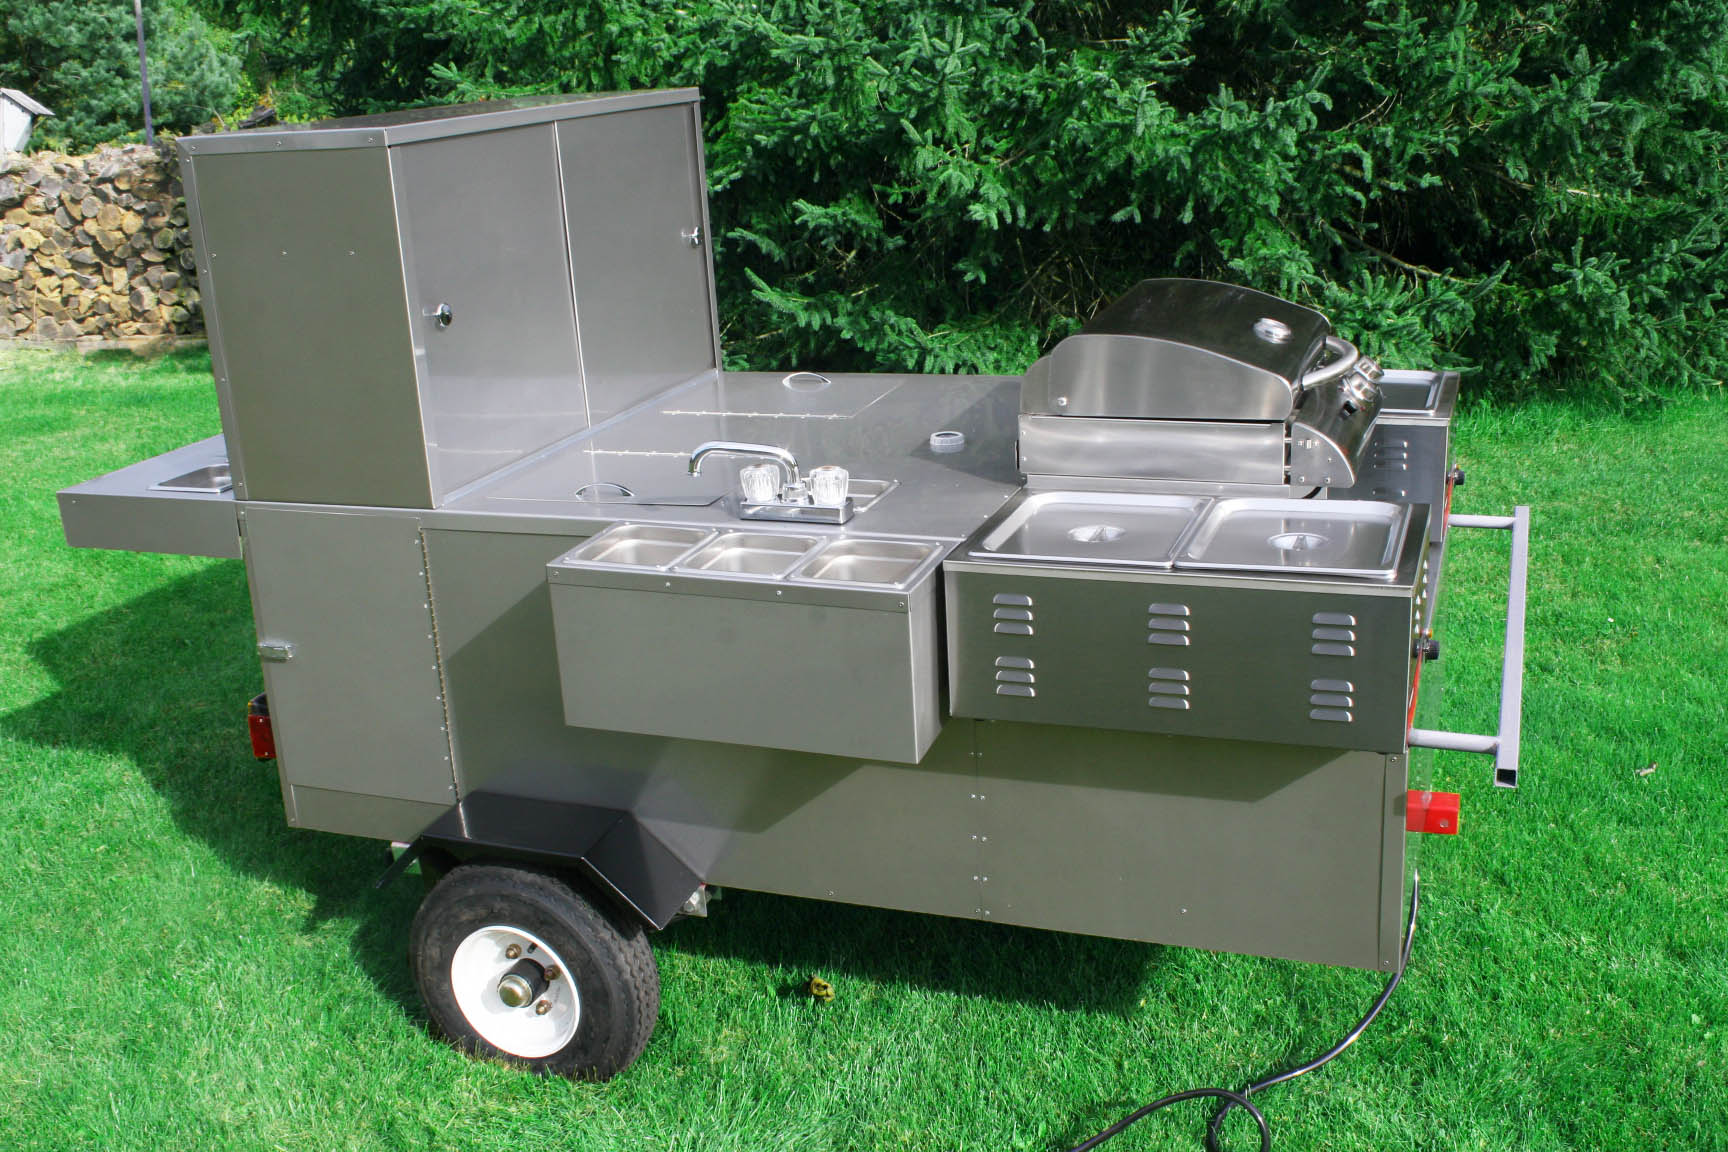 https://www.hotdogcartcompany.com/wp-content/uploads/2019/09/electric-hot-dog-cart-grill-hot-dog-cart-company-11.jpg